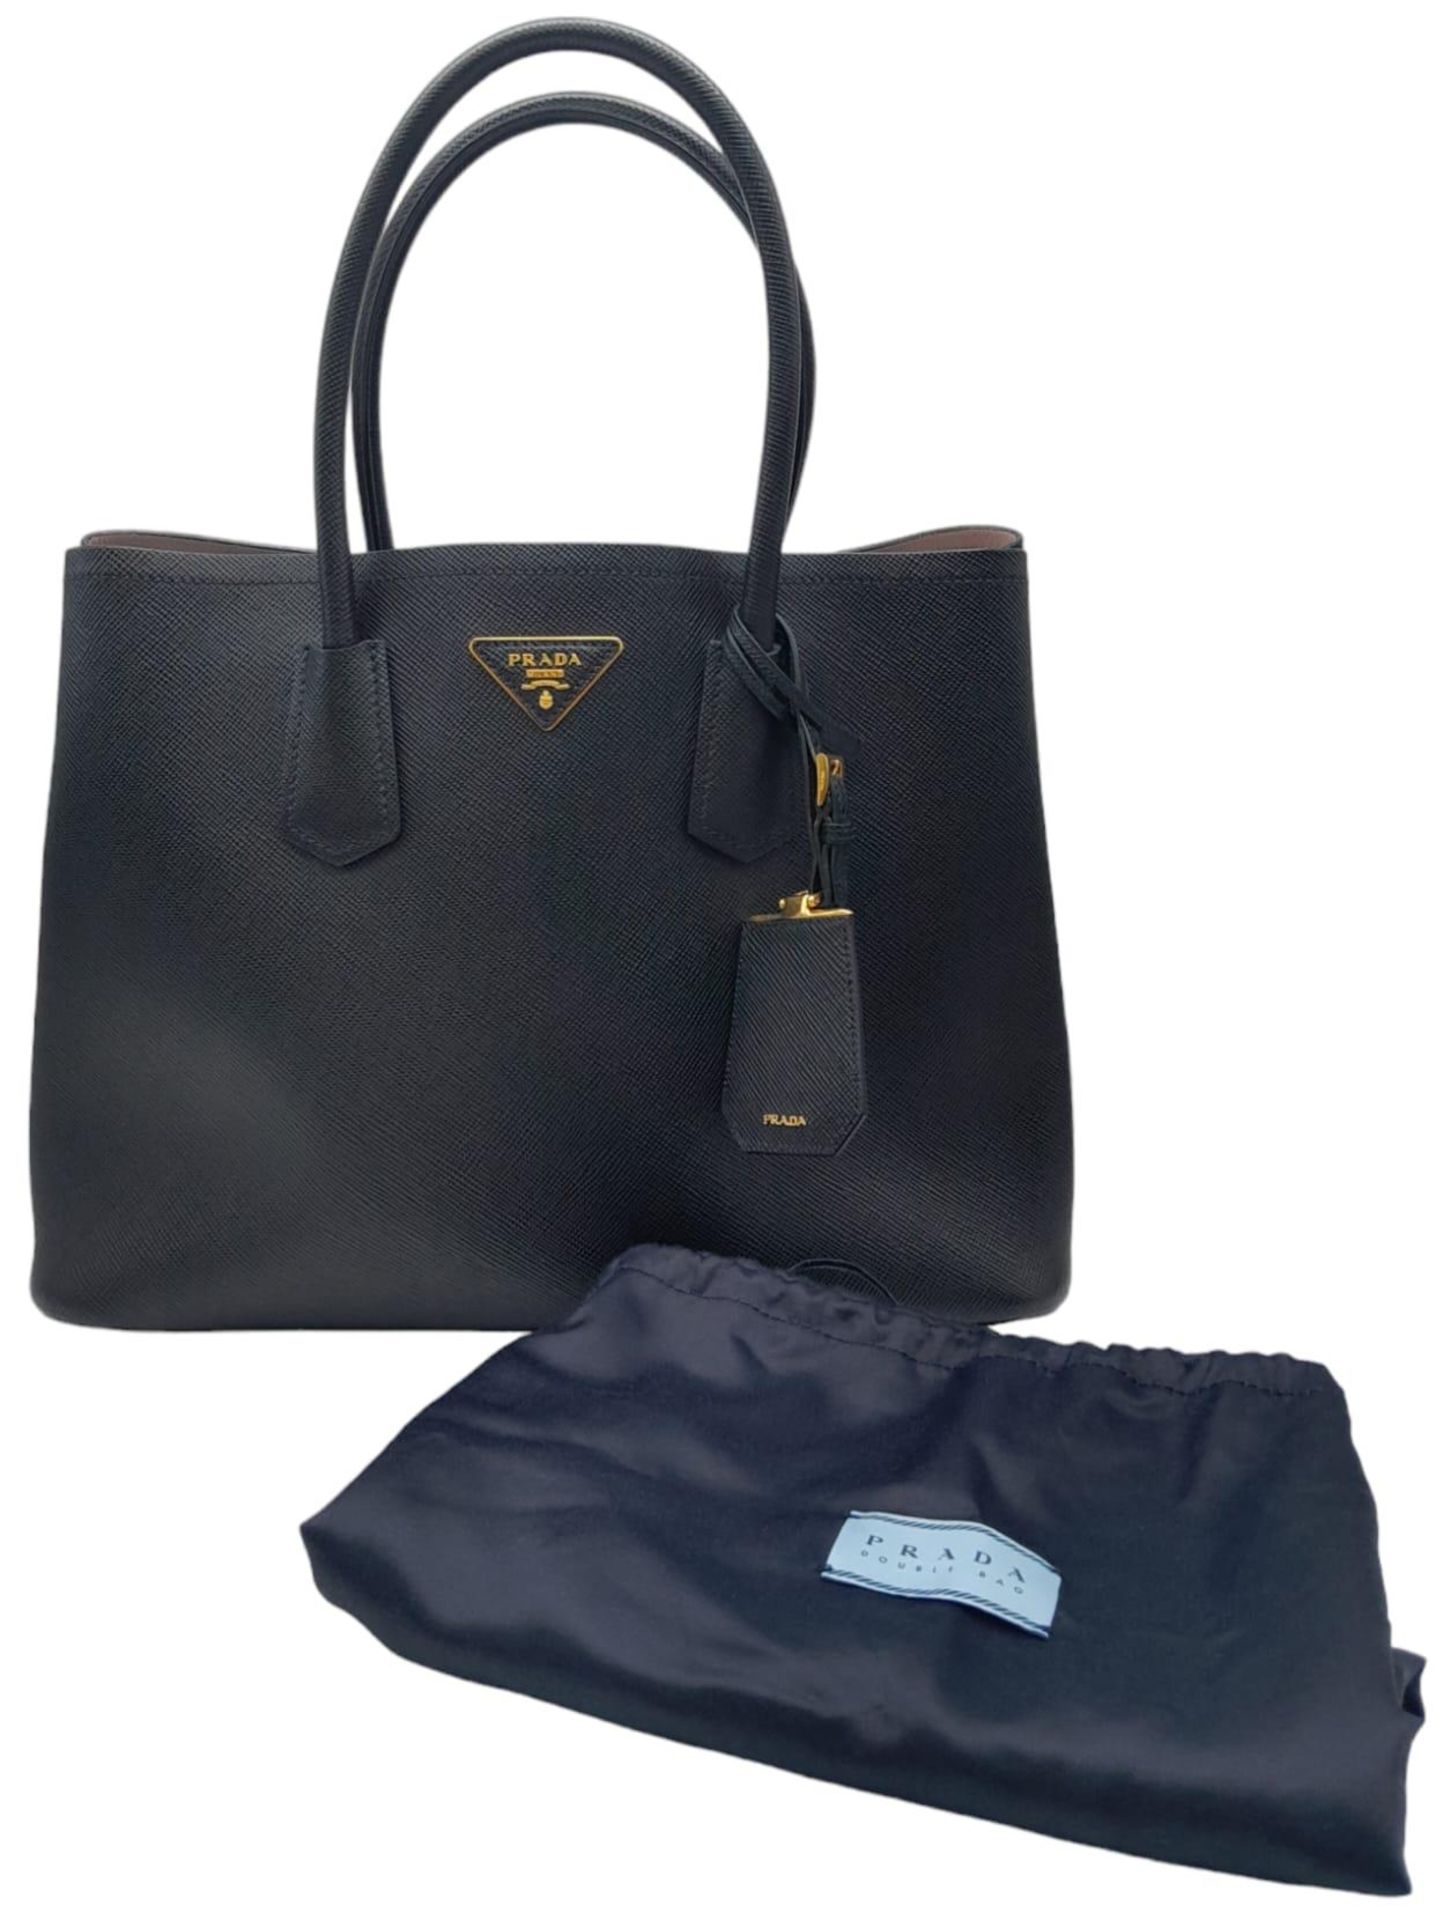 A Prada Black Leather Handbag. Textured black exterior with gold-tone hardware. Pastel pink